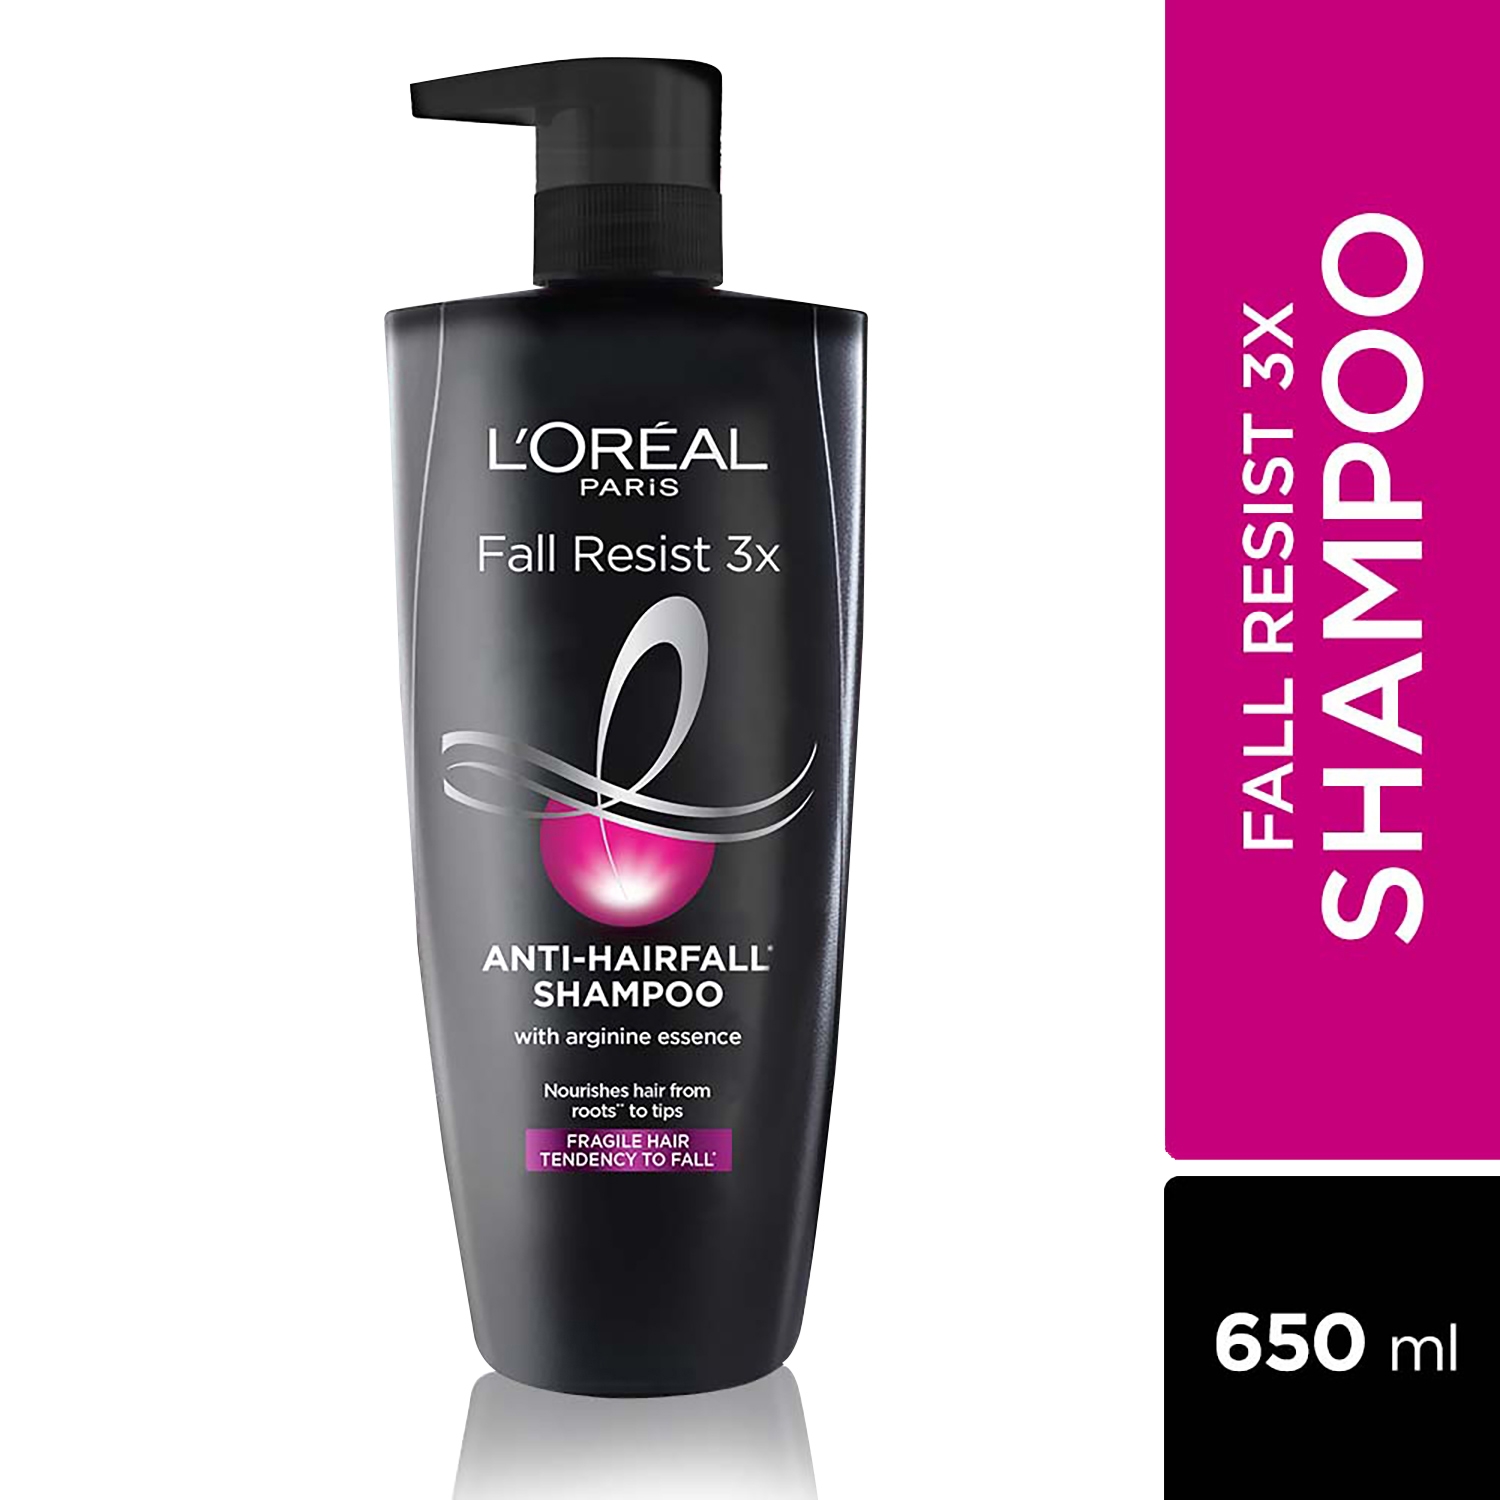 L'Oreal Paris | L'Oreal Paris Fall Resist 3X Anti-Hairfall Shampoo (650ml)